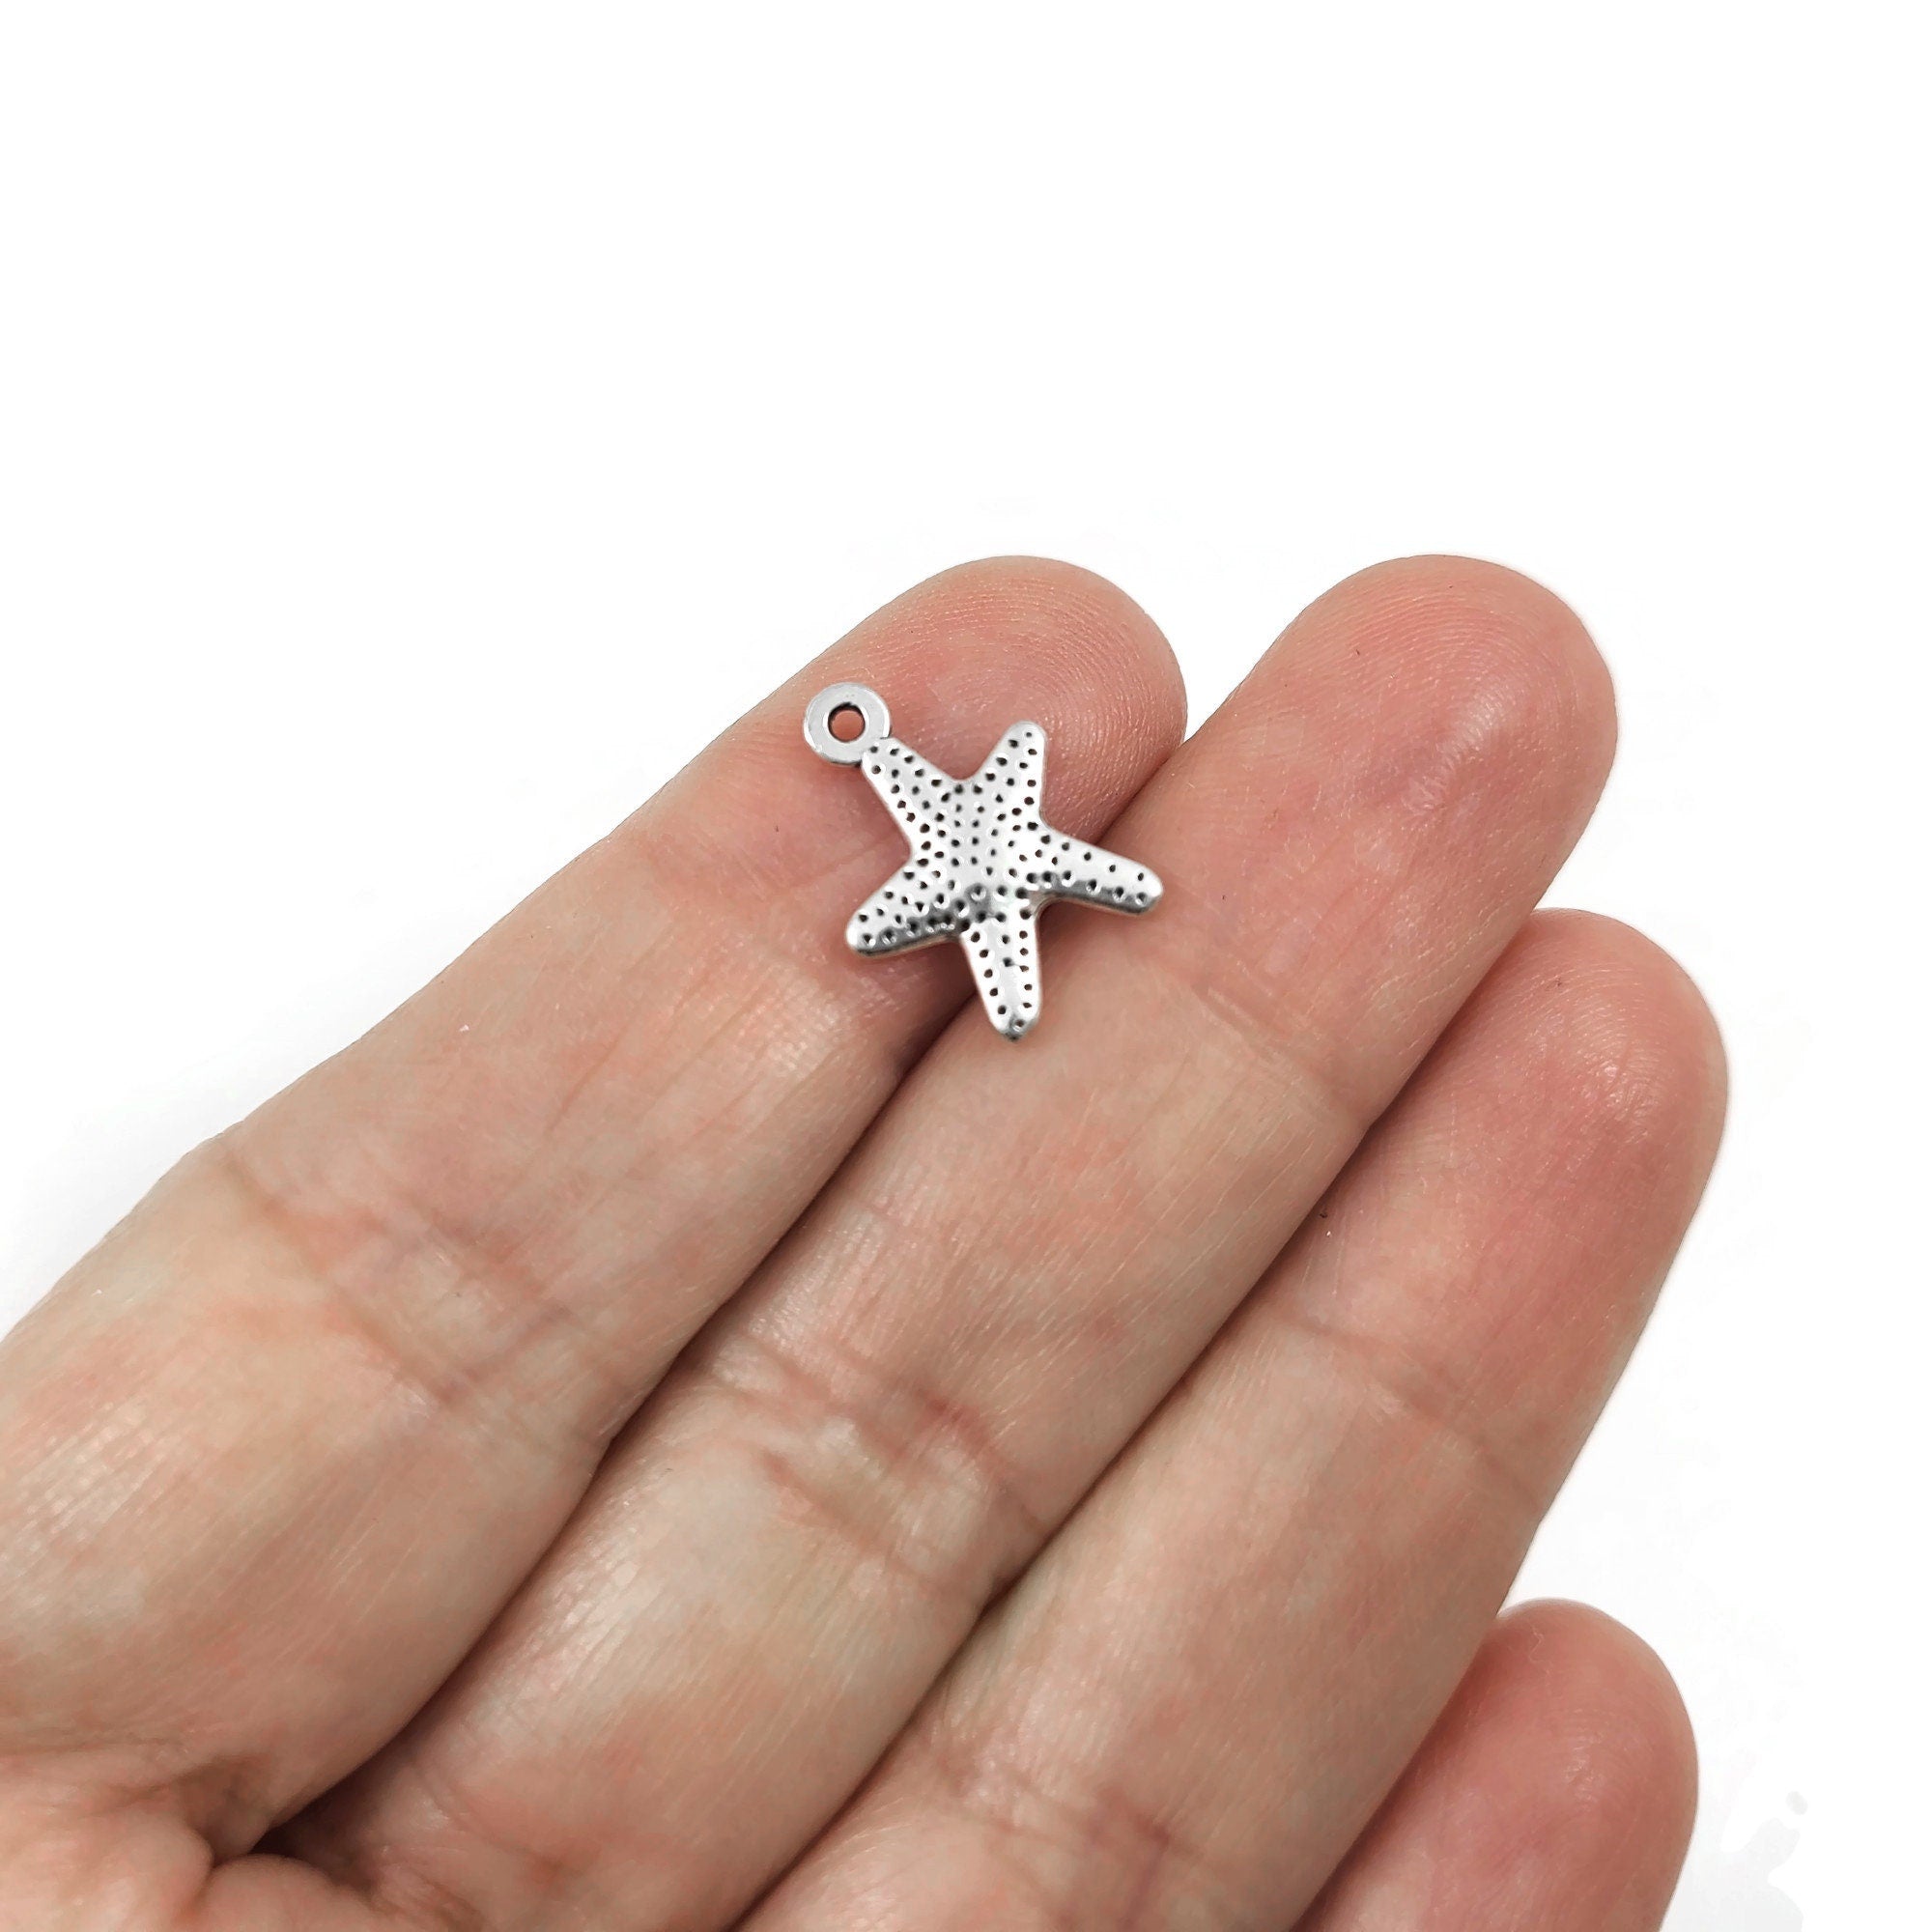 Cute starfish sea star charms, 16mm nickel free ocean pendants, Hypoallergenic nautical jewelry making